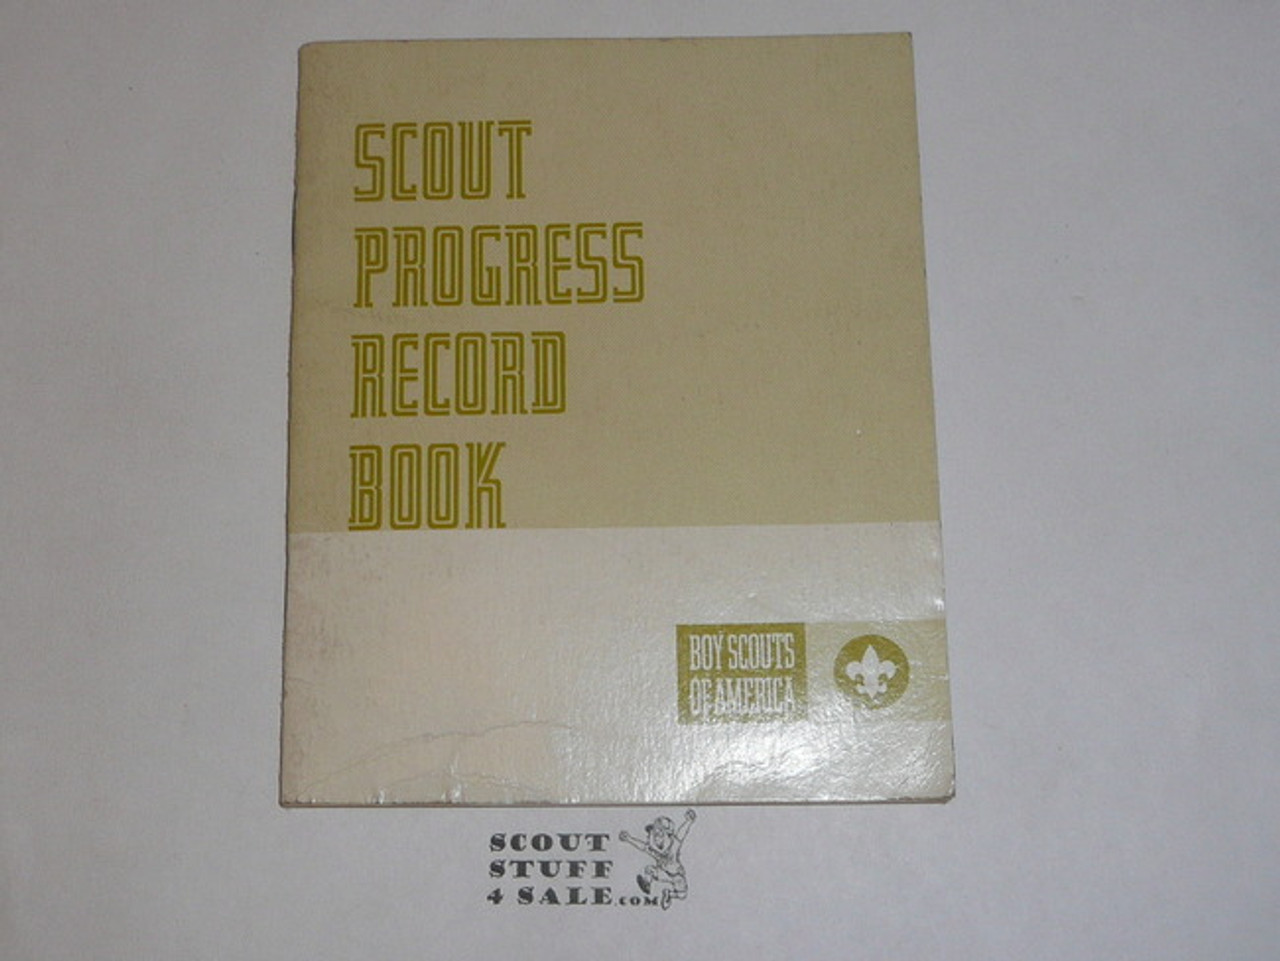 Scout Progress Record Book, 11-72 Printing